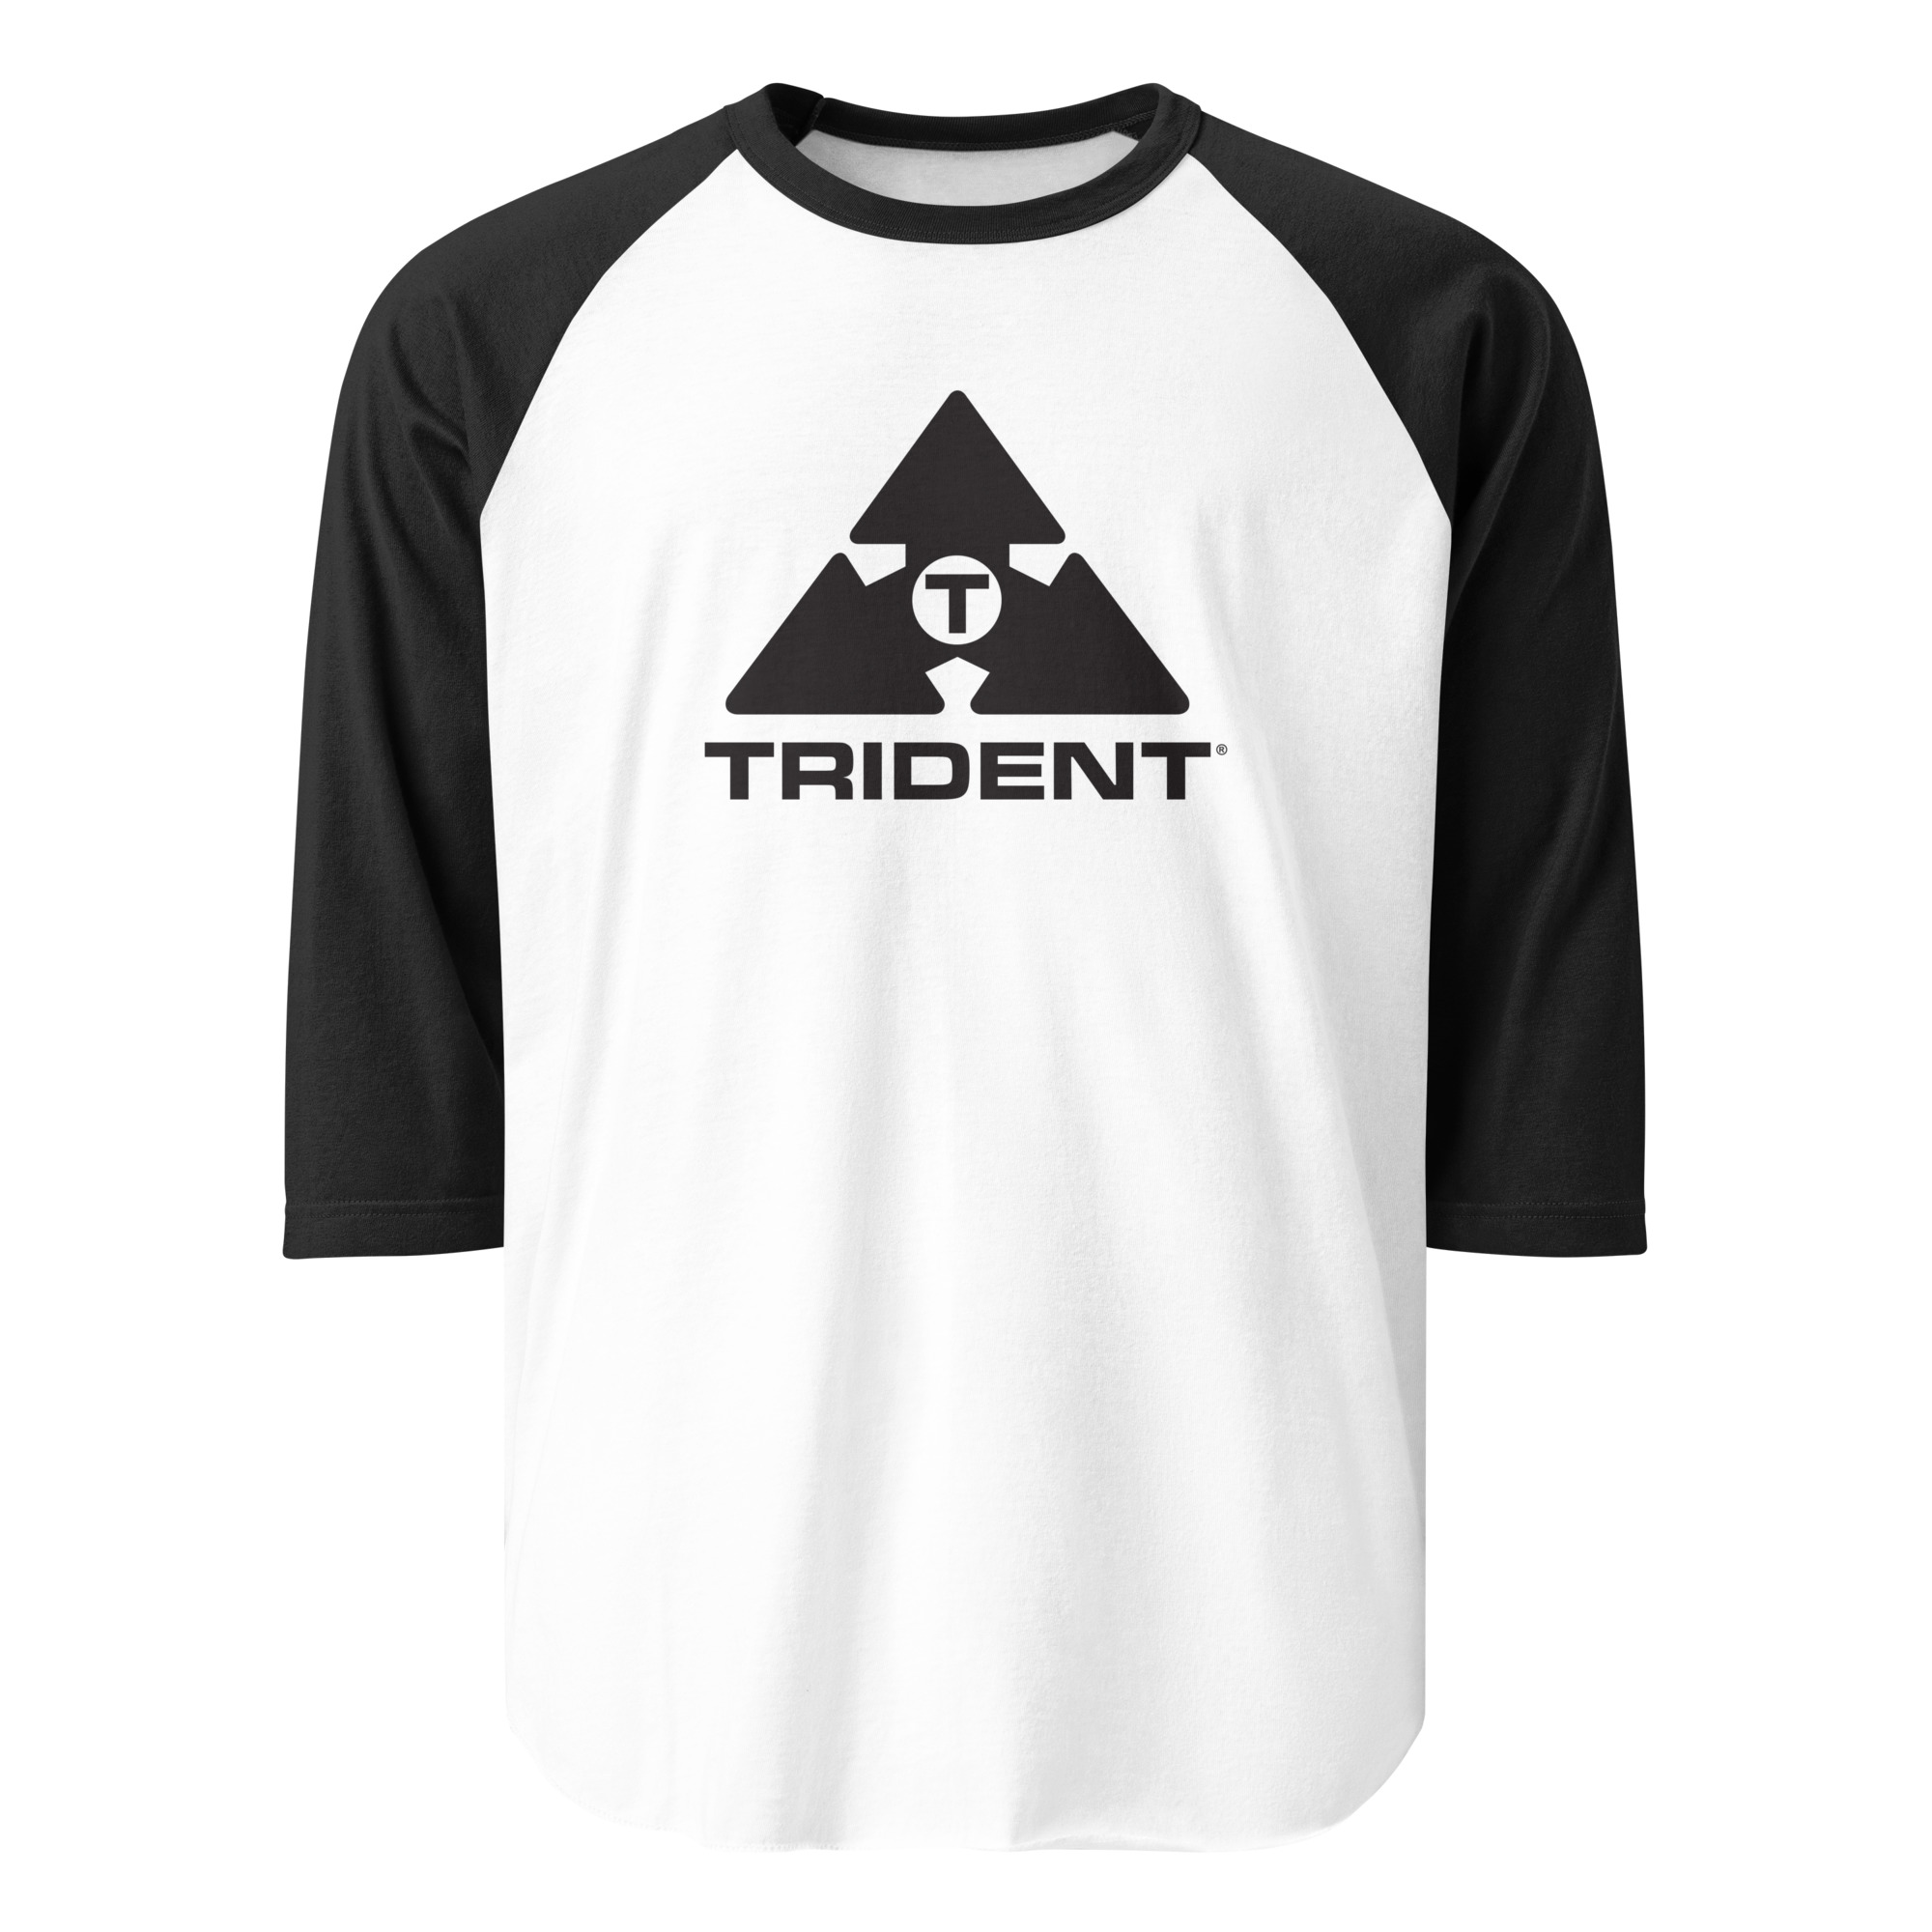 Trident 3/4 sleeve raglan shirt - Trident Audio Developments